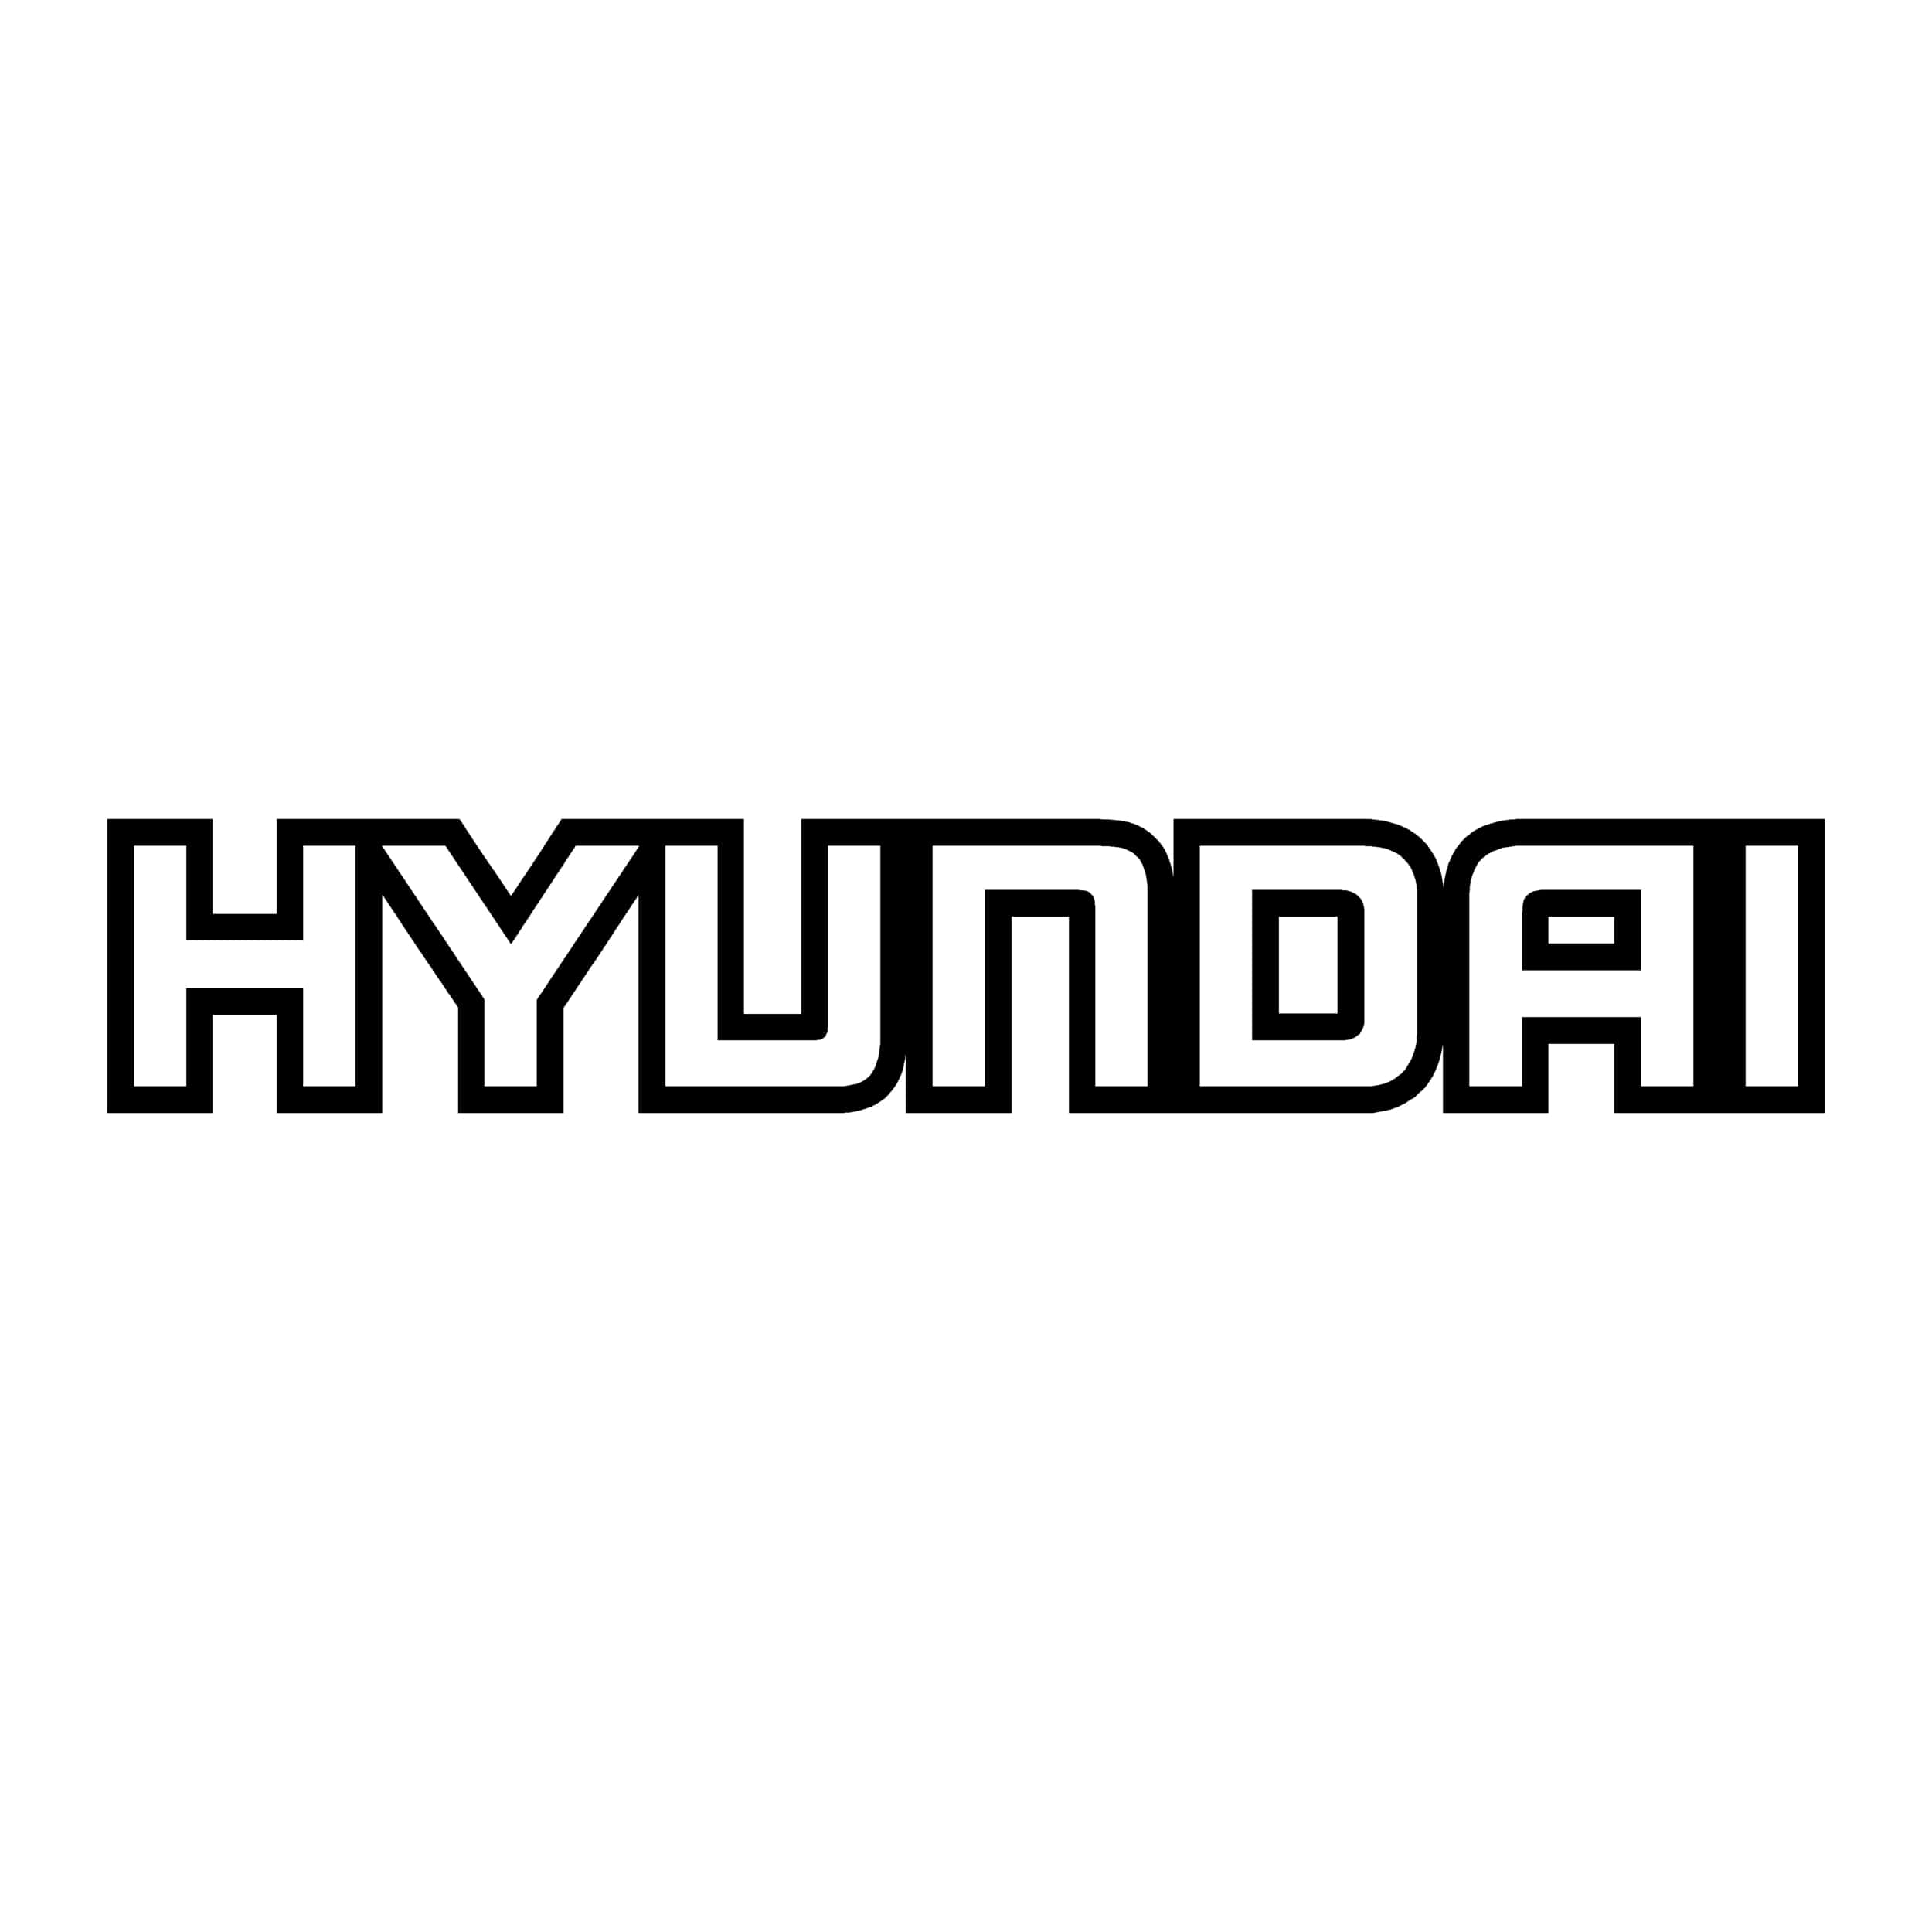 stickers-hyundai-ref-2-auto-tuning-amortisseur-4x4-tout-terrain-auto-camion-competition-rallye-autocollant-min